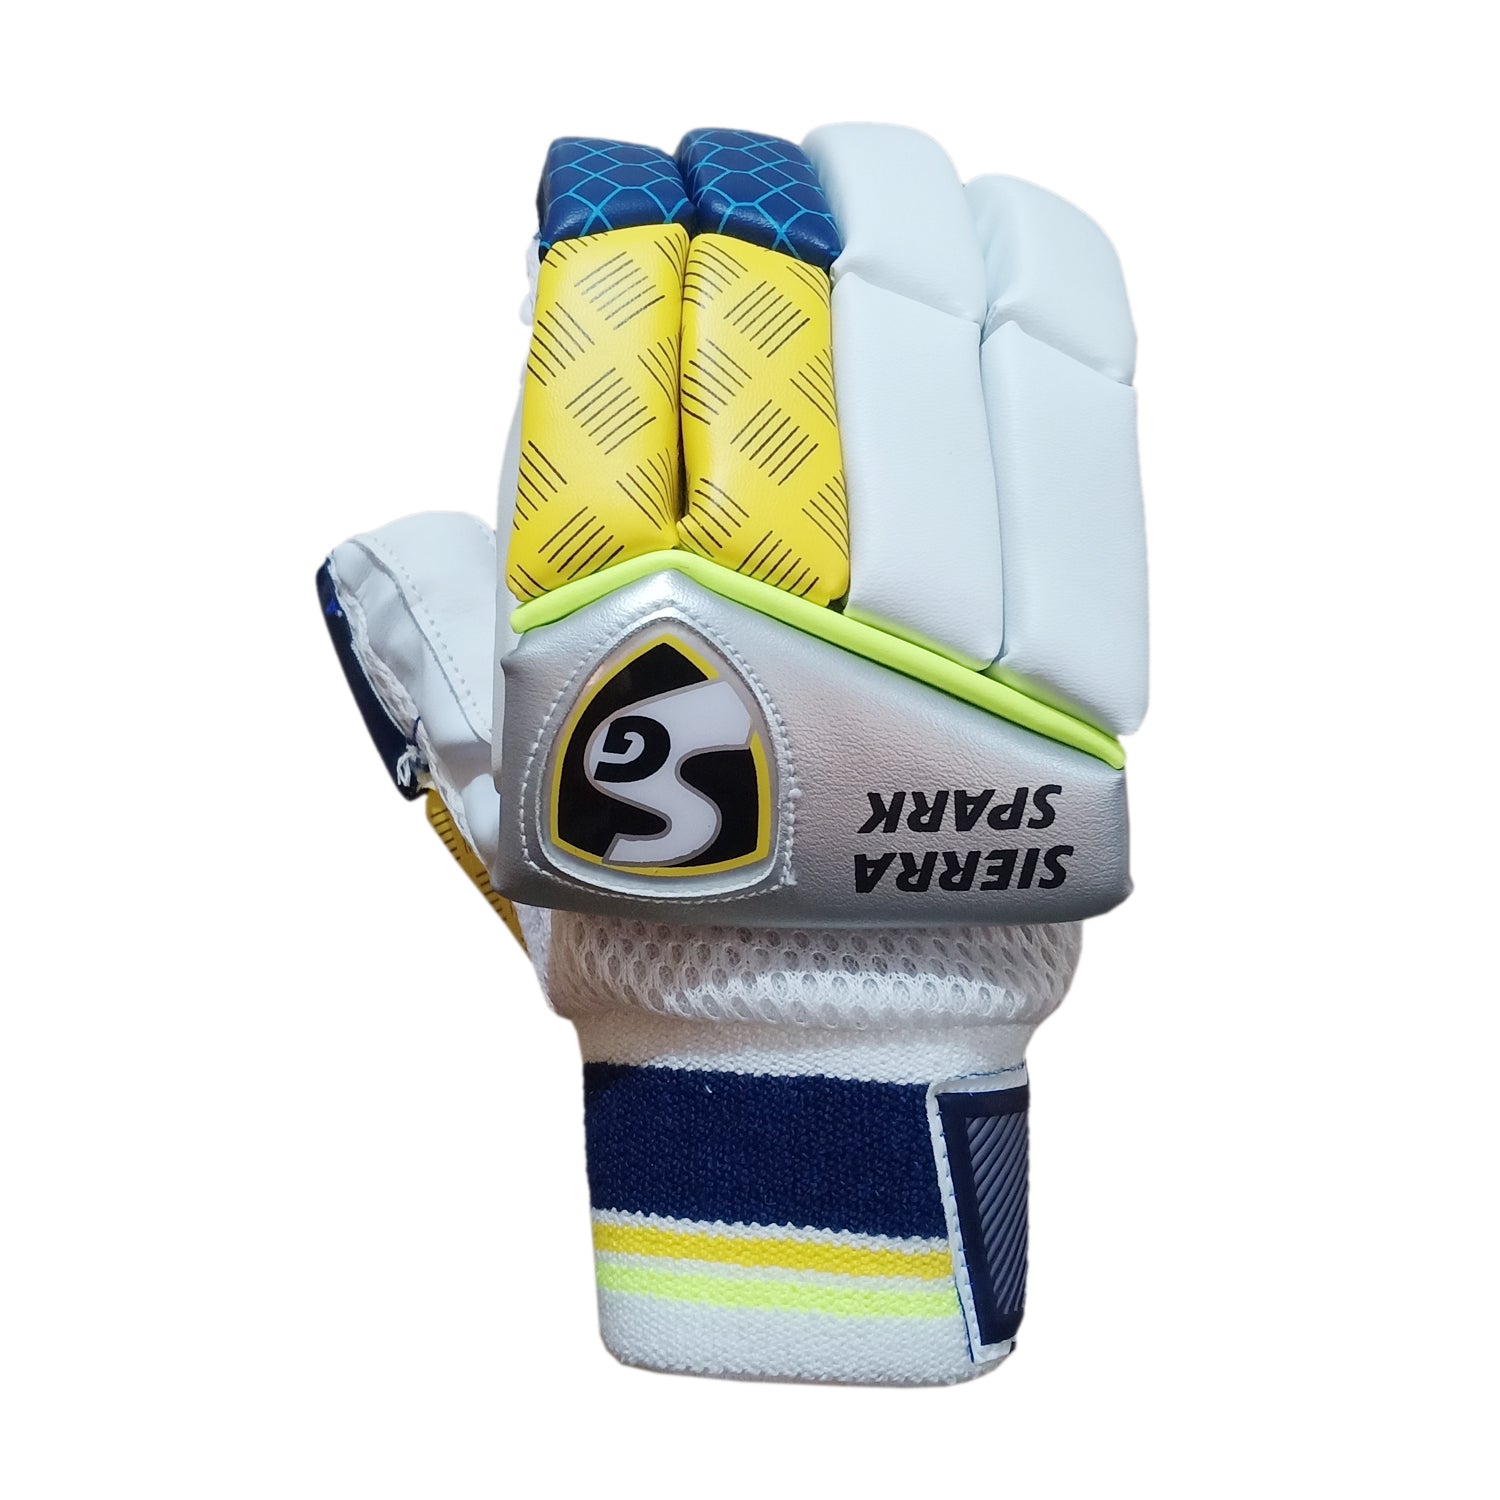 SG Sierra Spark Batting Gloves - Right Hand - Best Price online Prokicksports.com